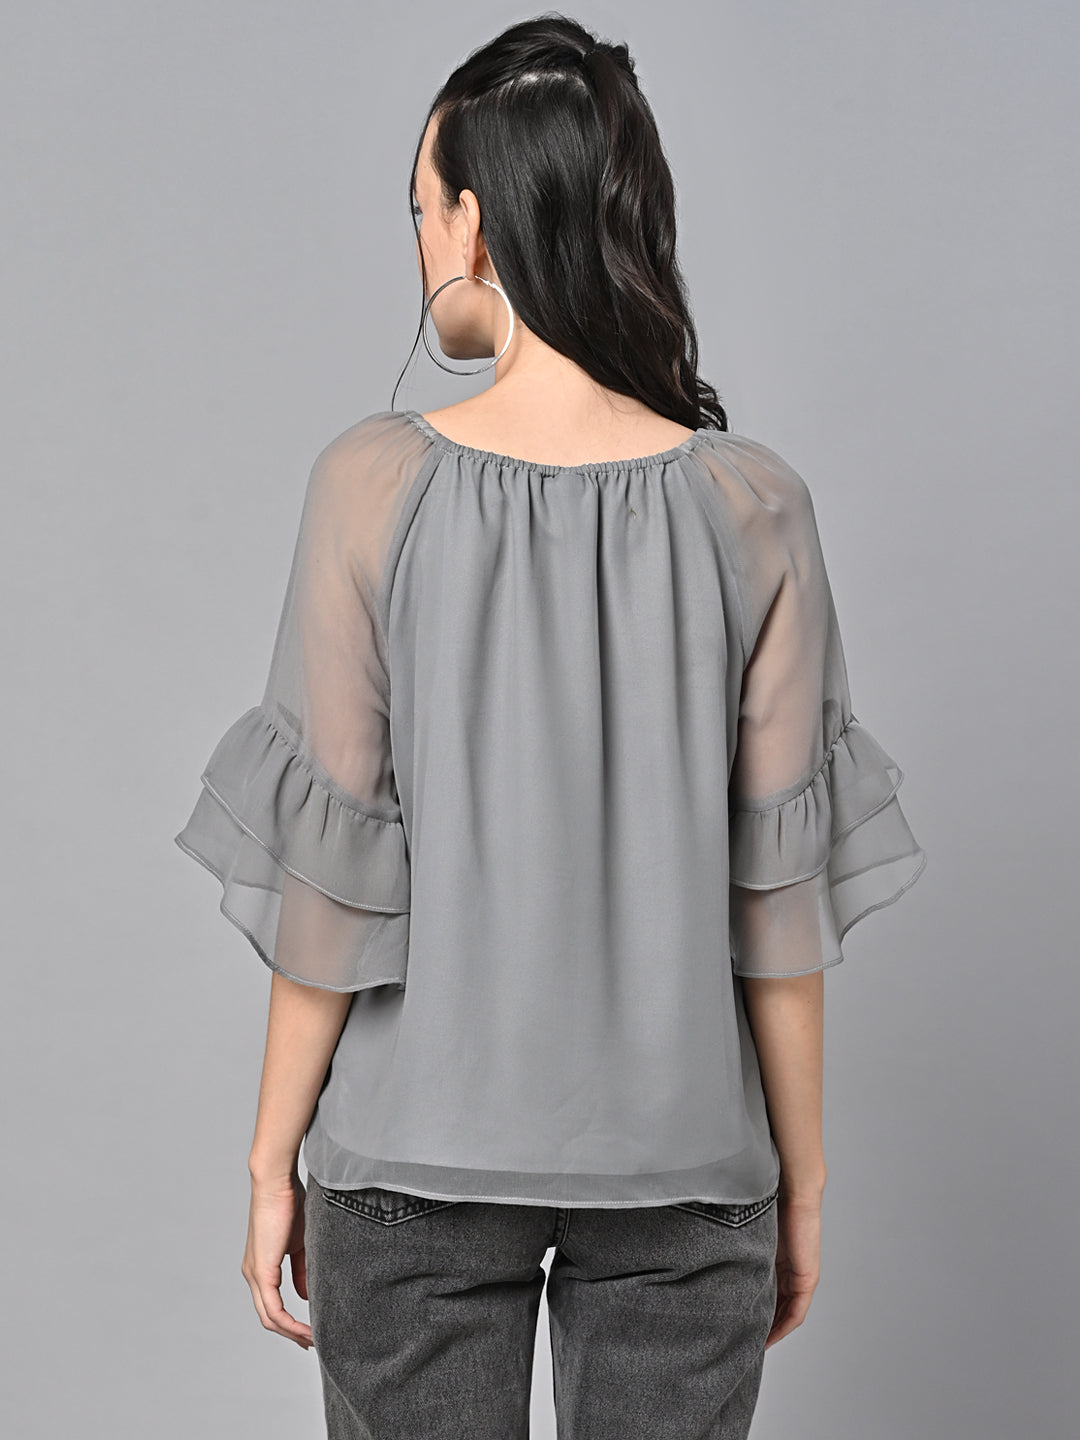 Valbone Women’s Grey Color Solid Top With Half-Sleeves